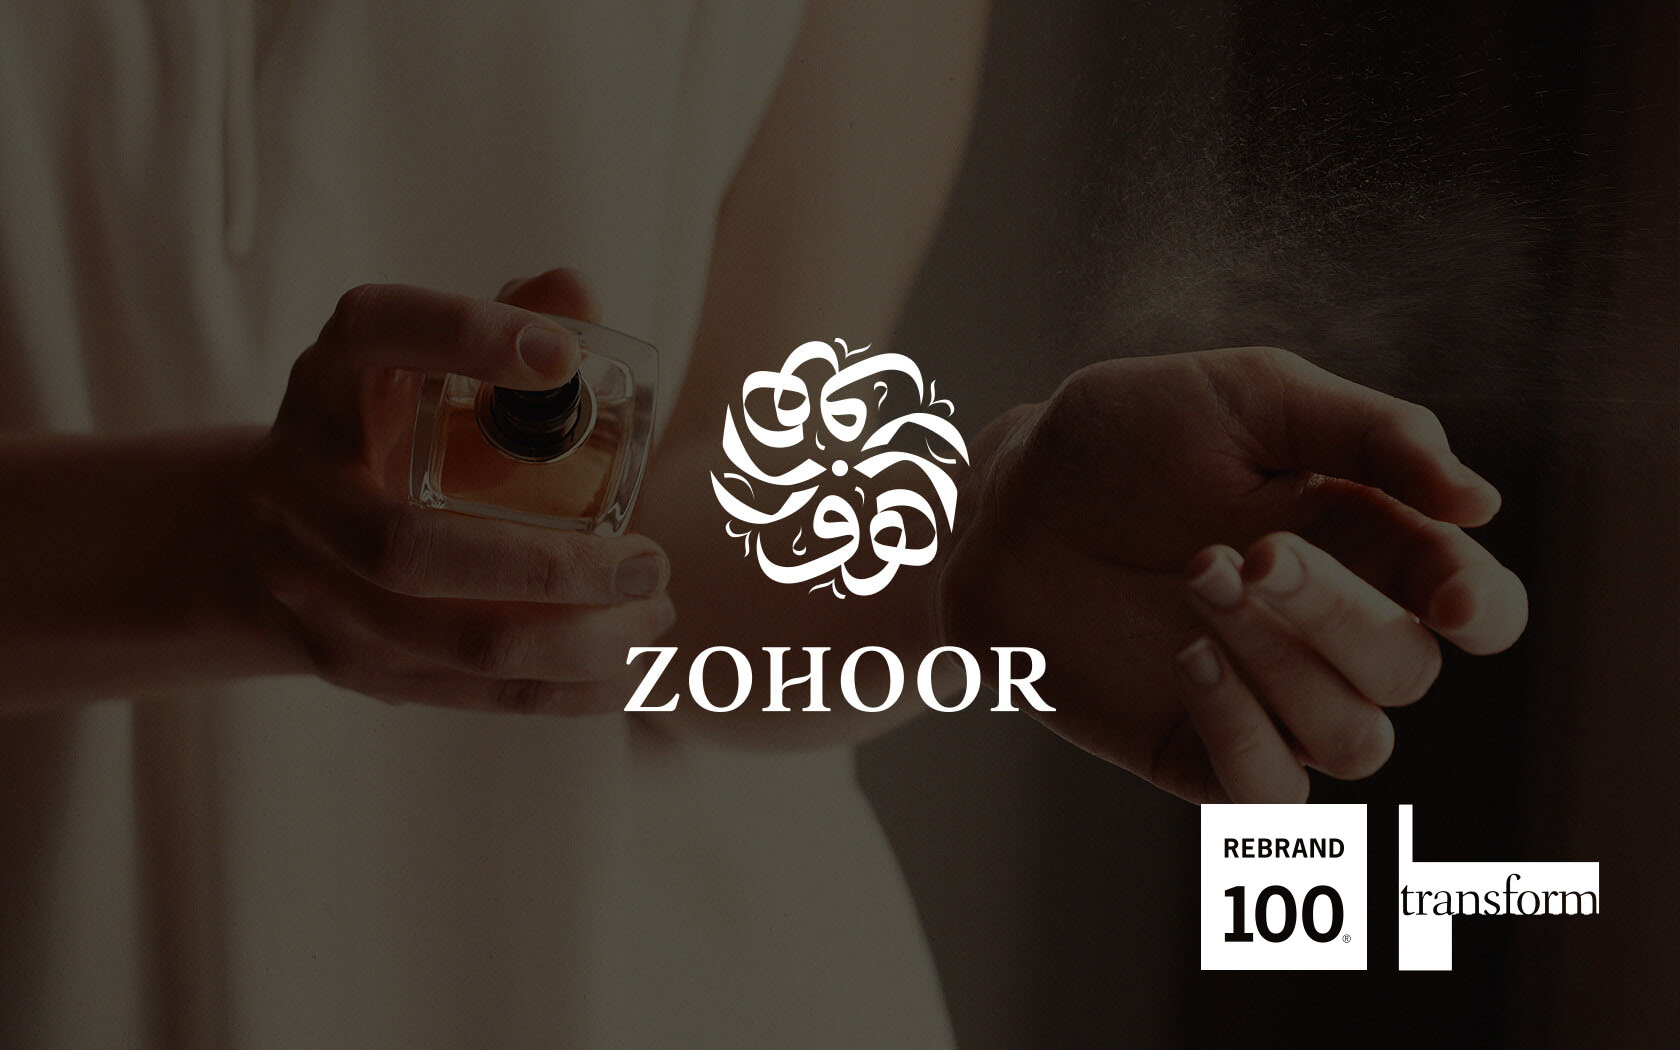 Zohoor. Brand logo in white